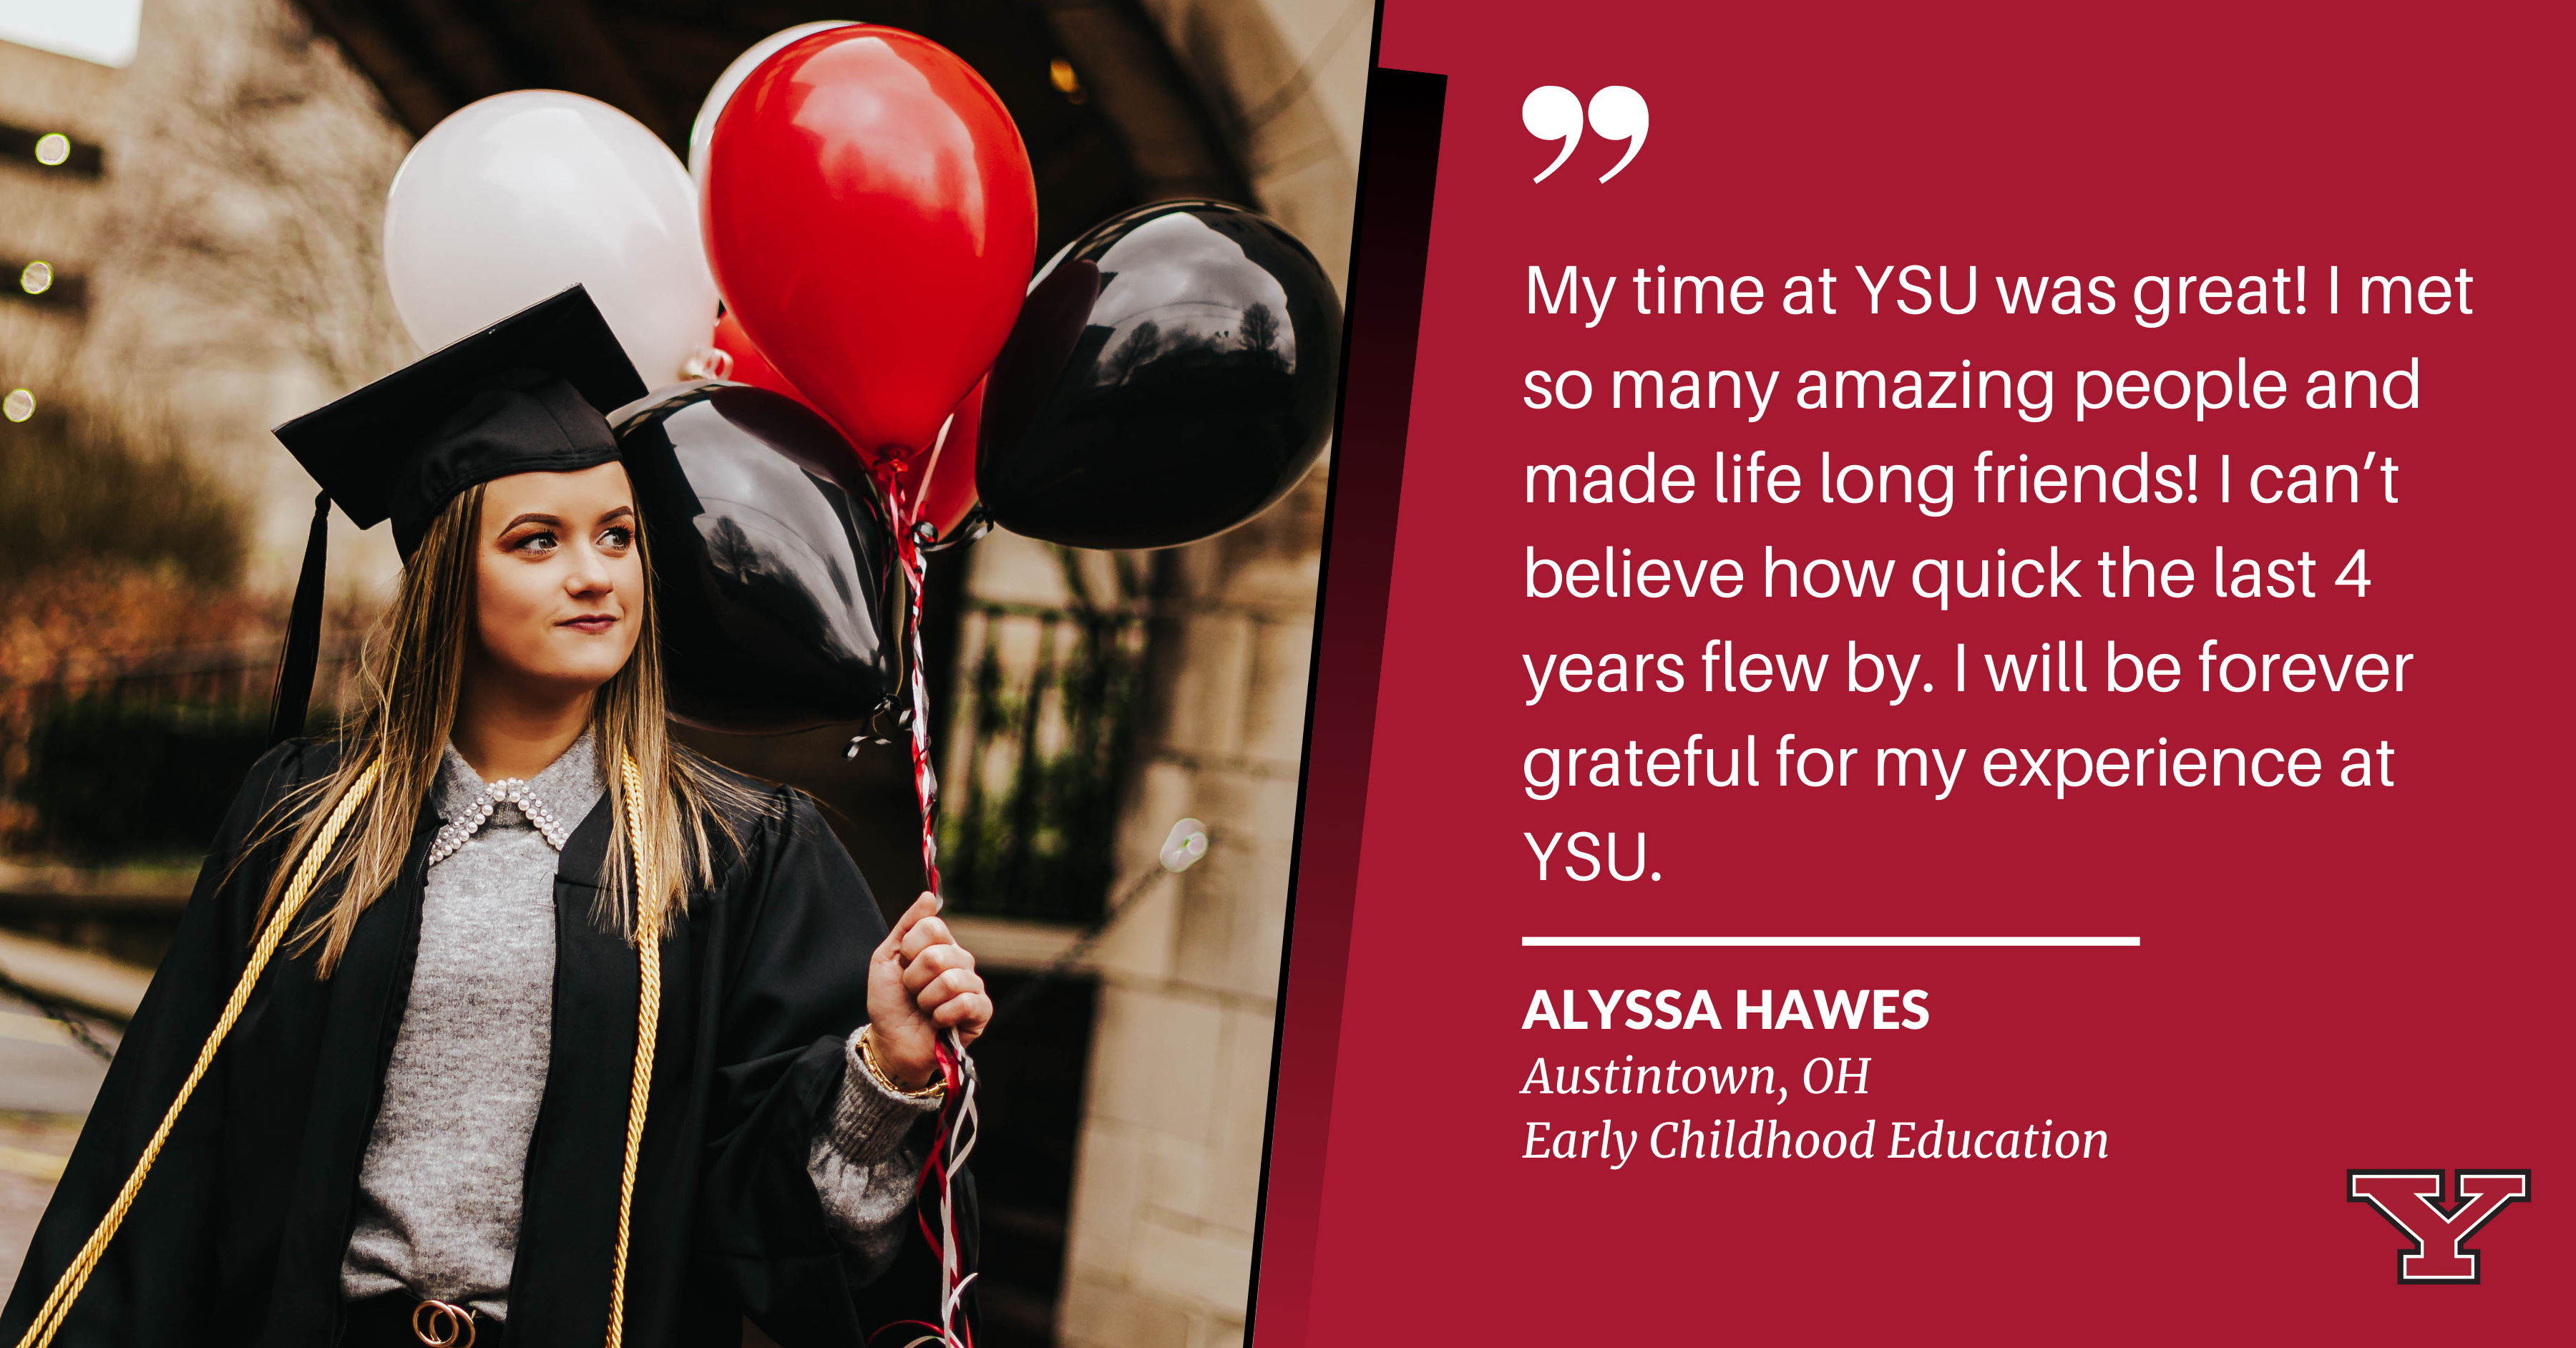 Alyssa Hawes posing with balloons in graduation gear